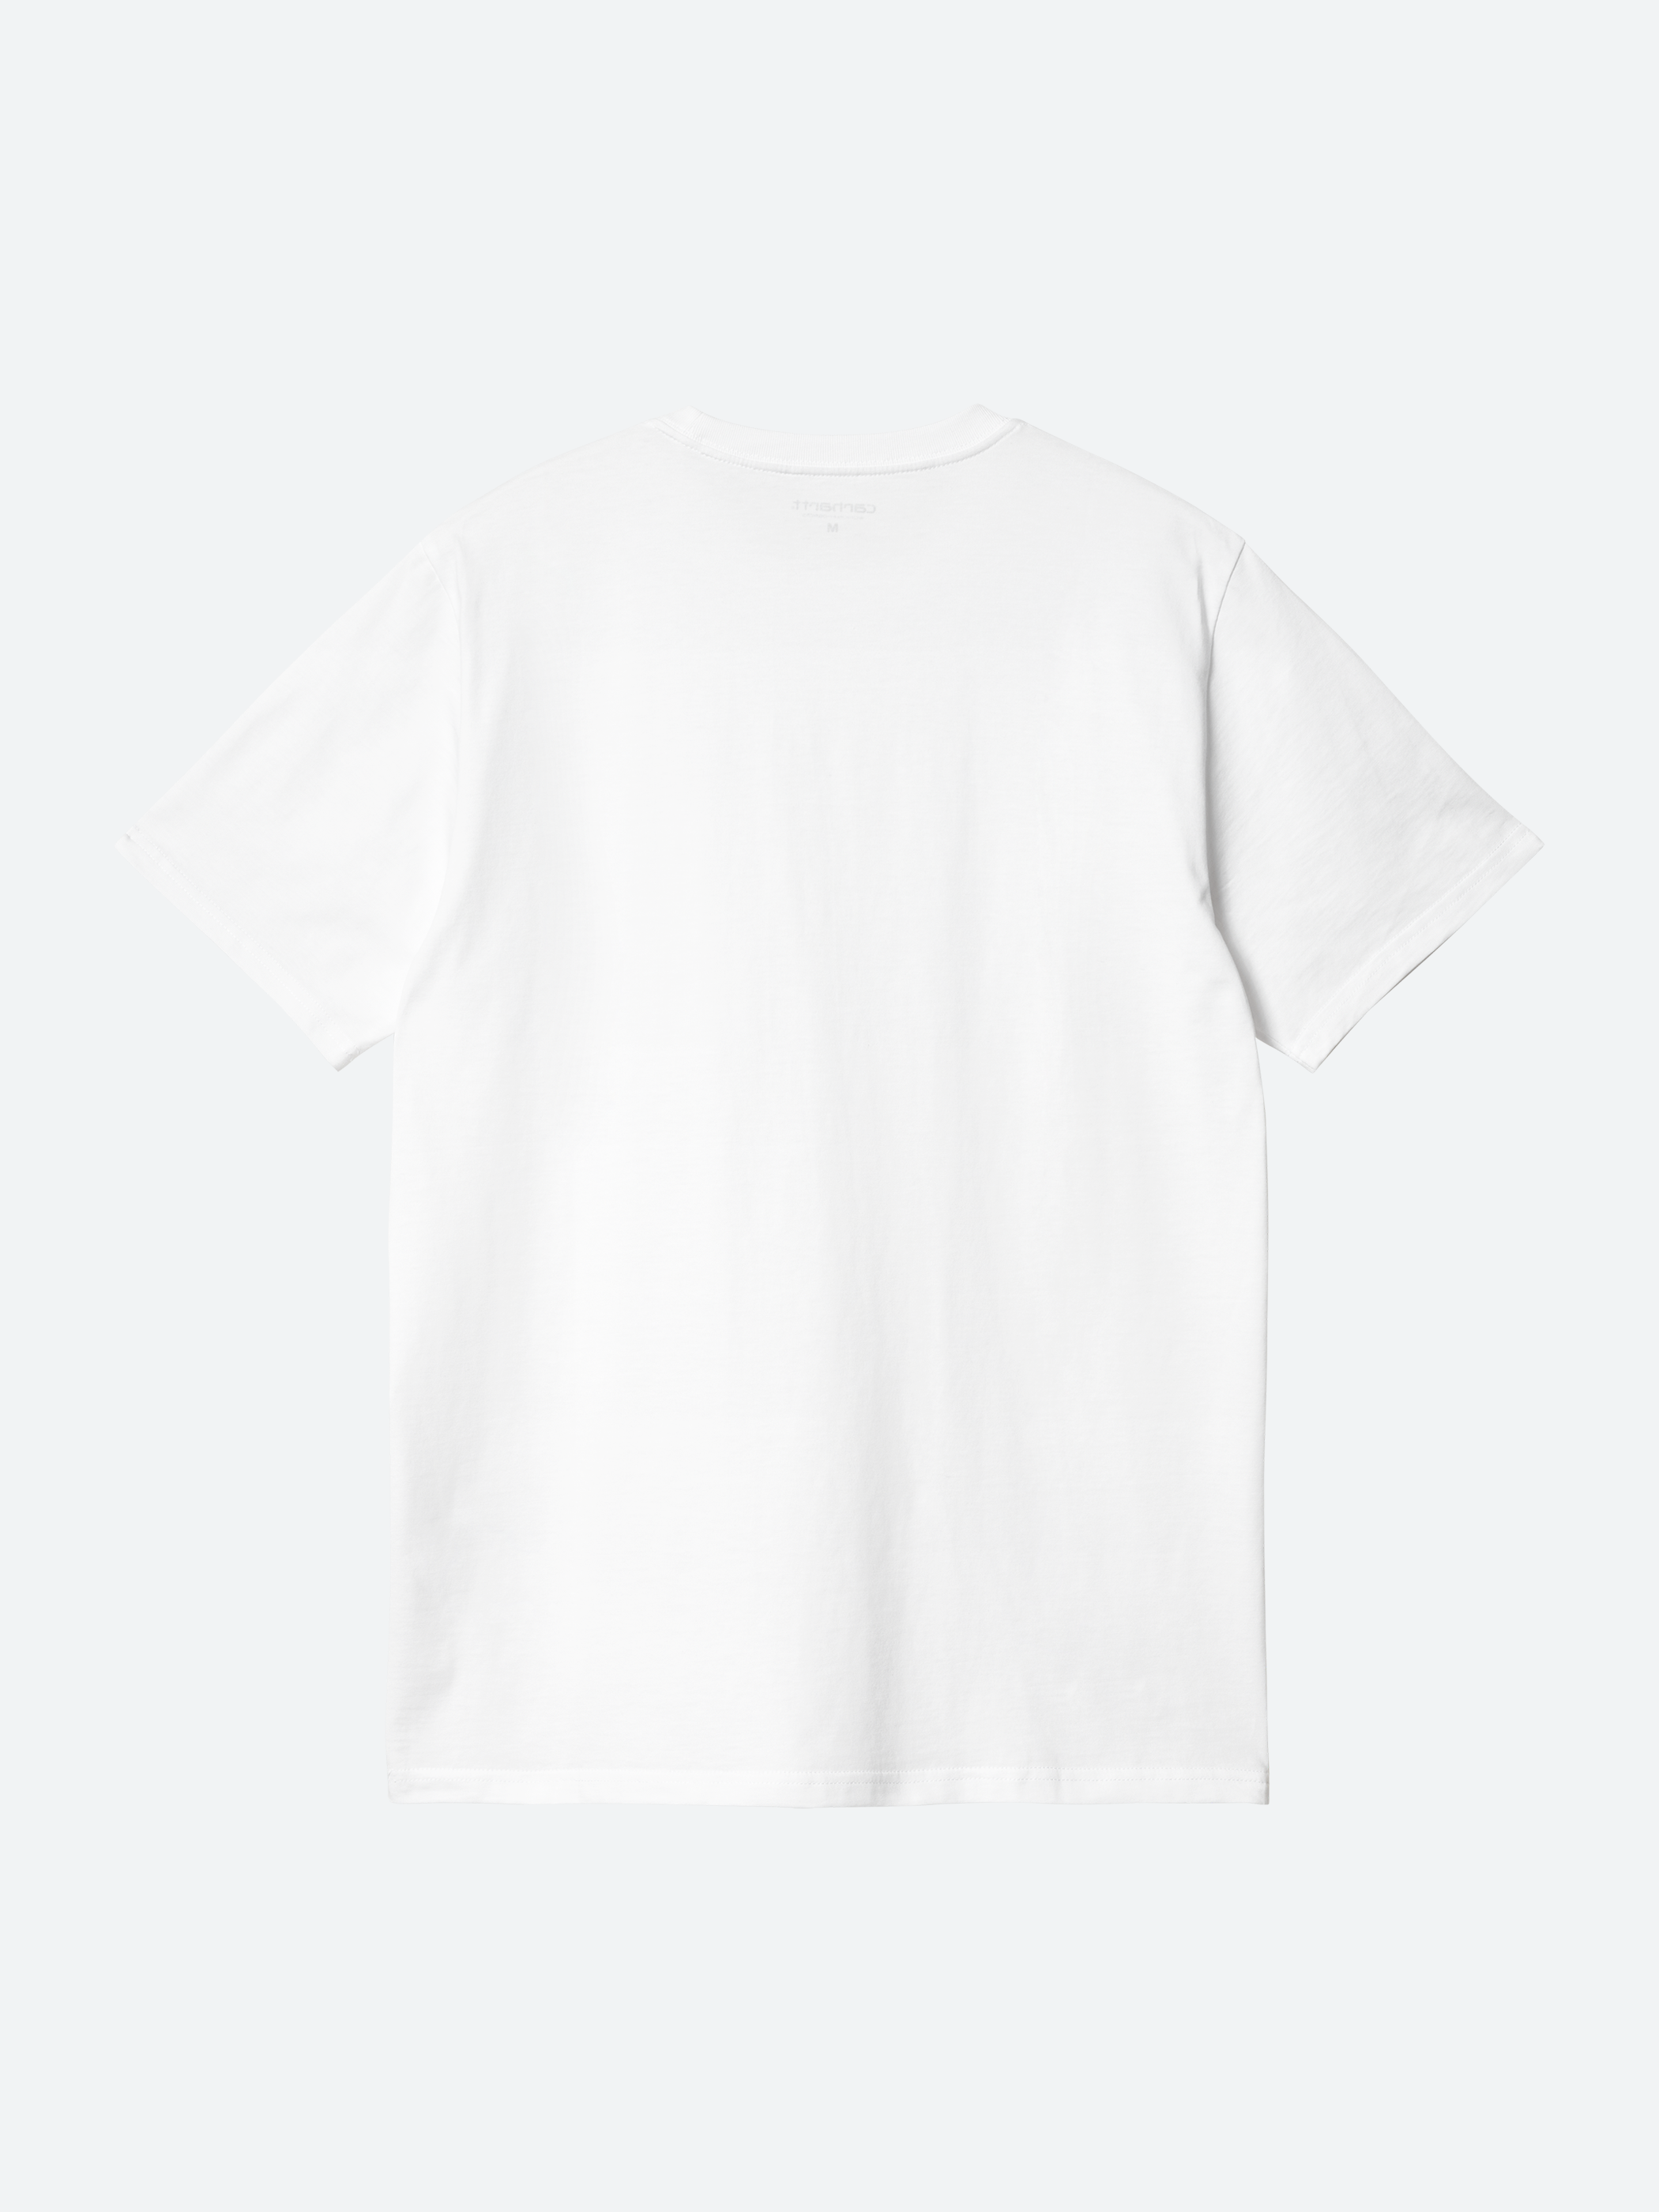 S/S Pocket T-Shirt